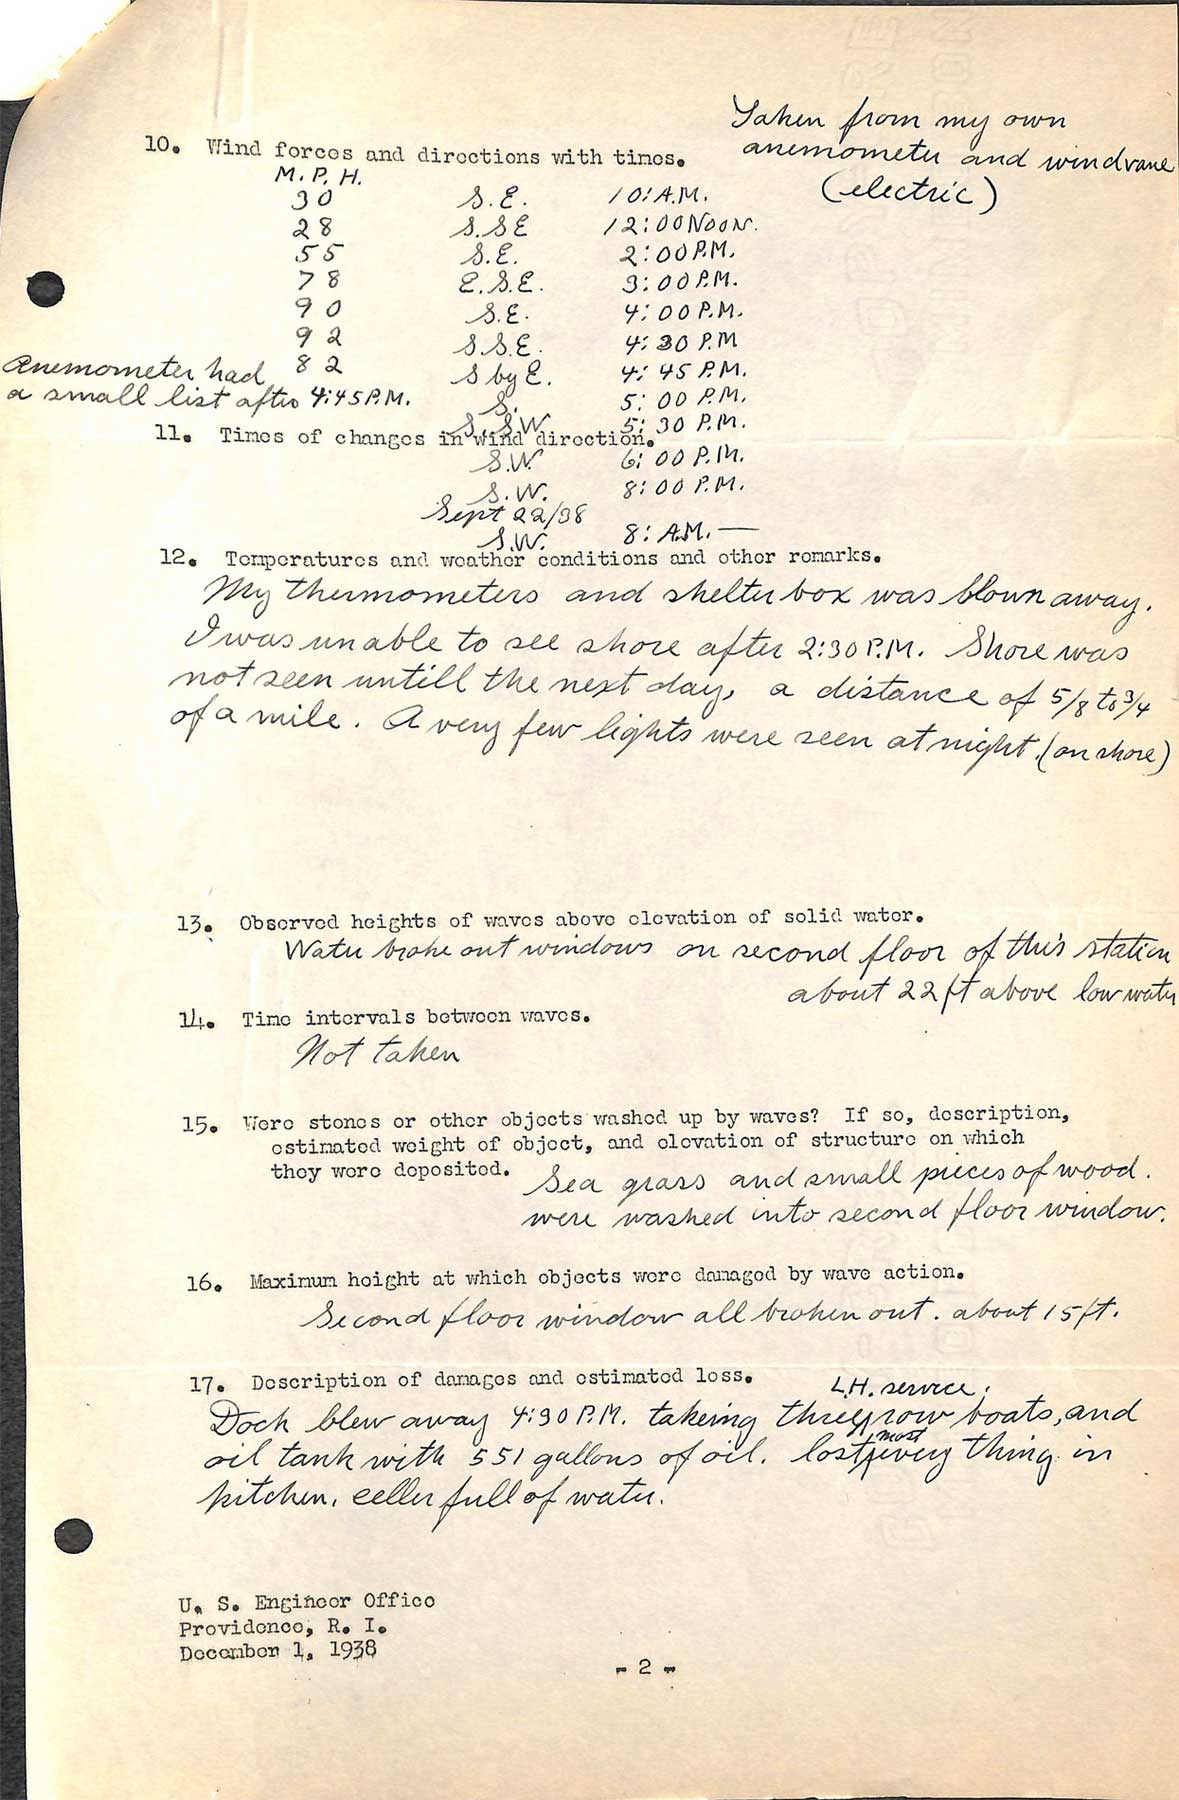 Conimicut Light - A questionnaire regarding the hurricane of September 21, 1938